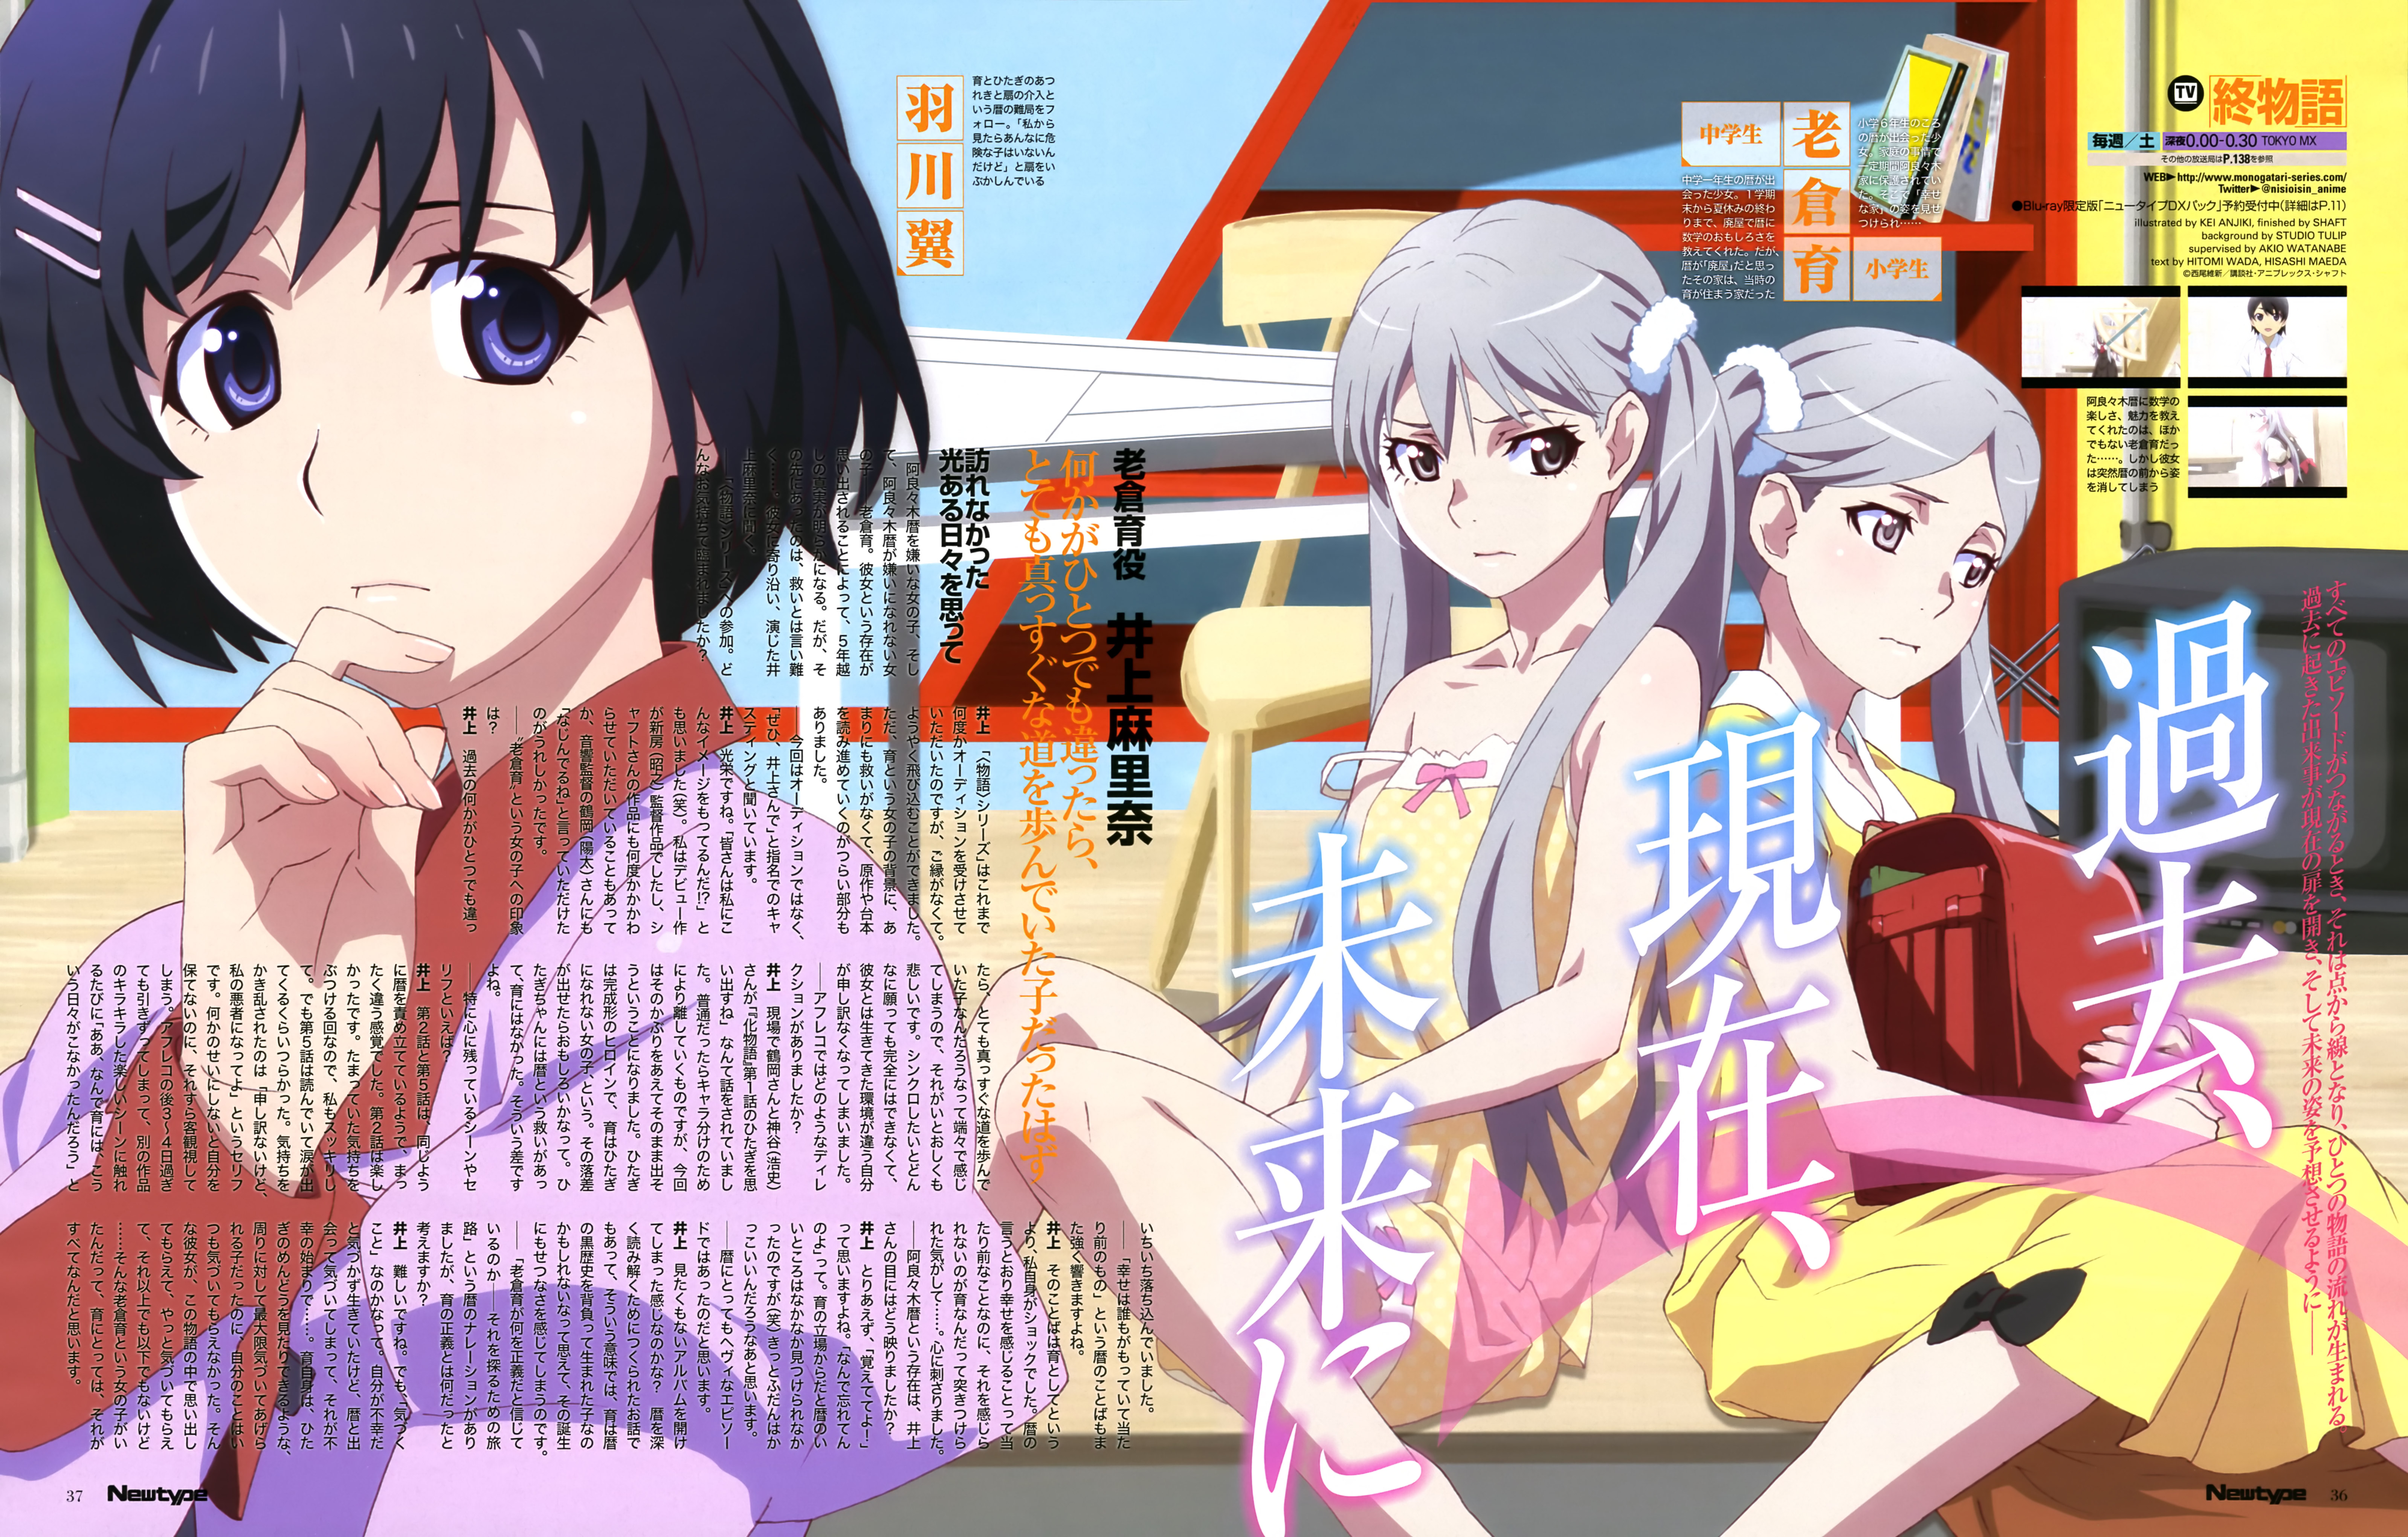 Owarimonogatari anime double page spready newtype december 2015 issue